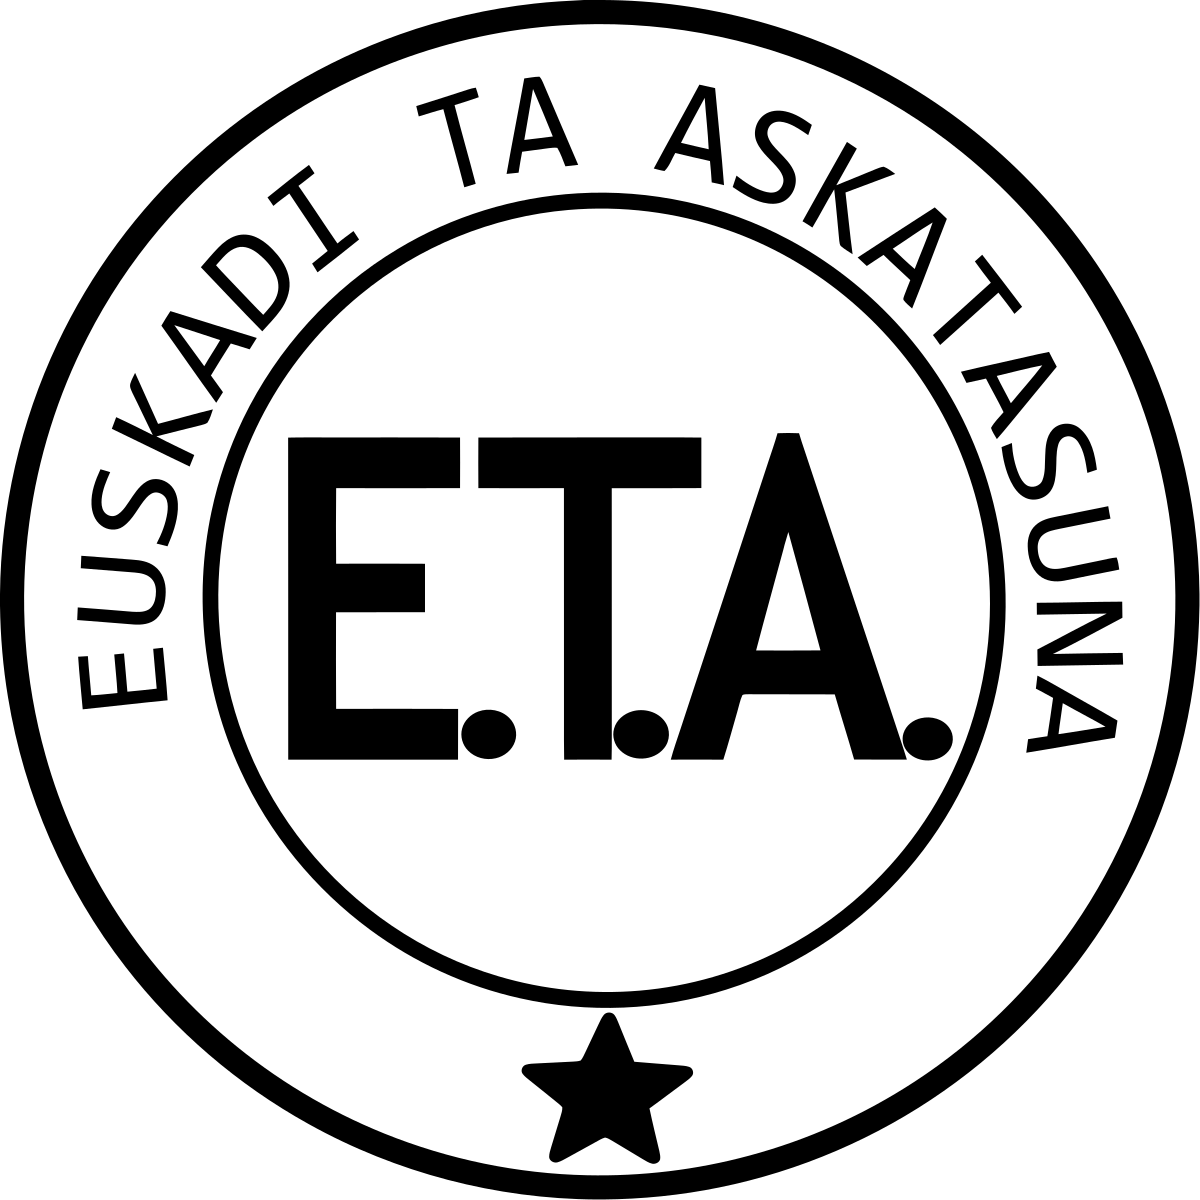 ETA (separatist group) - Wikipedia